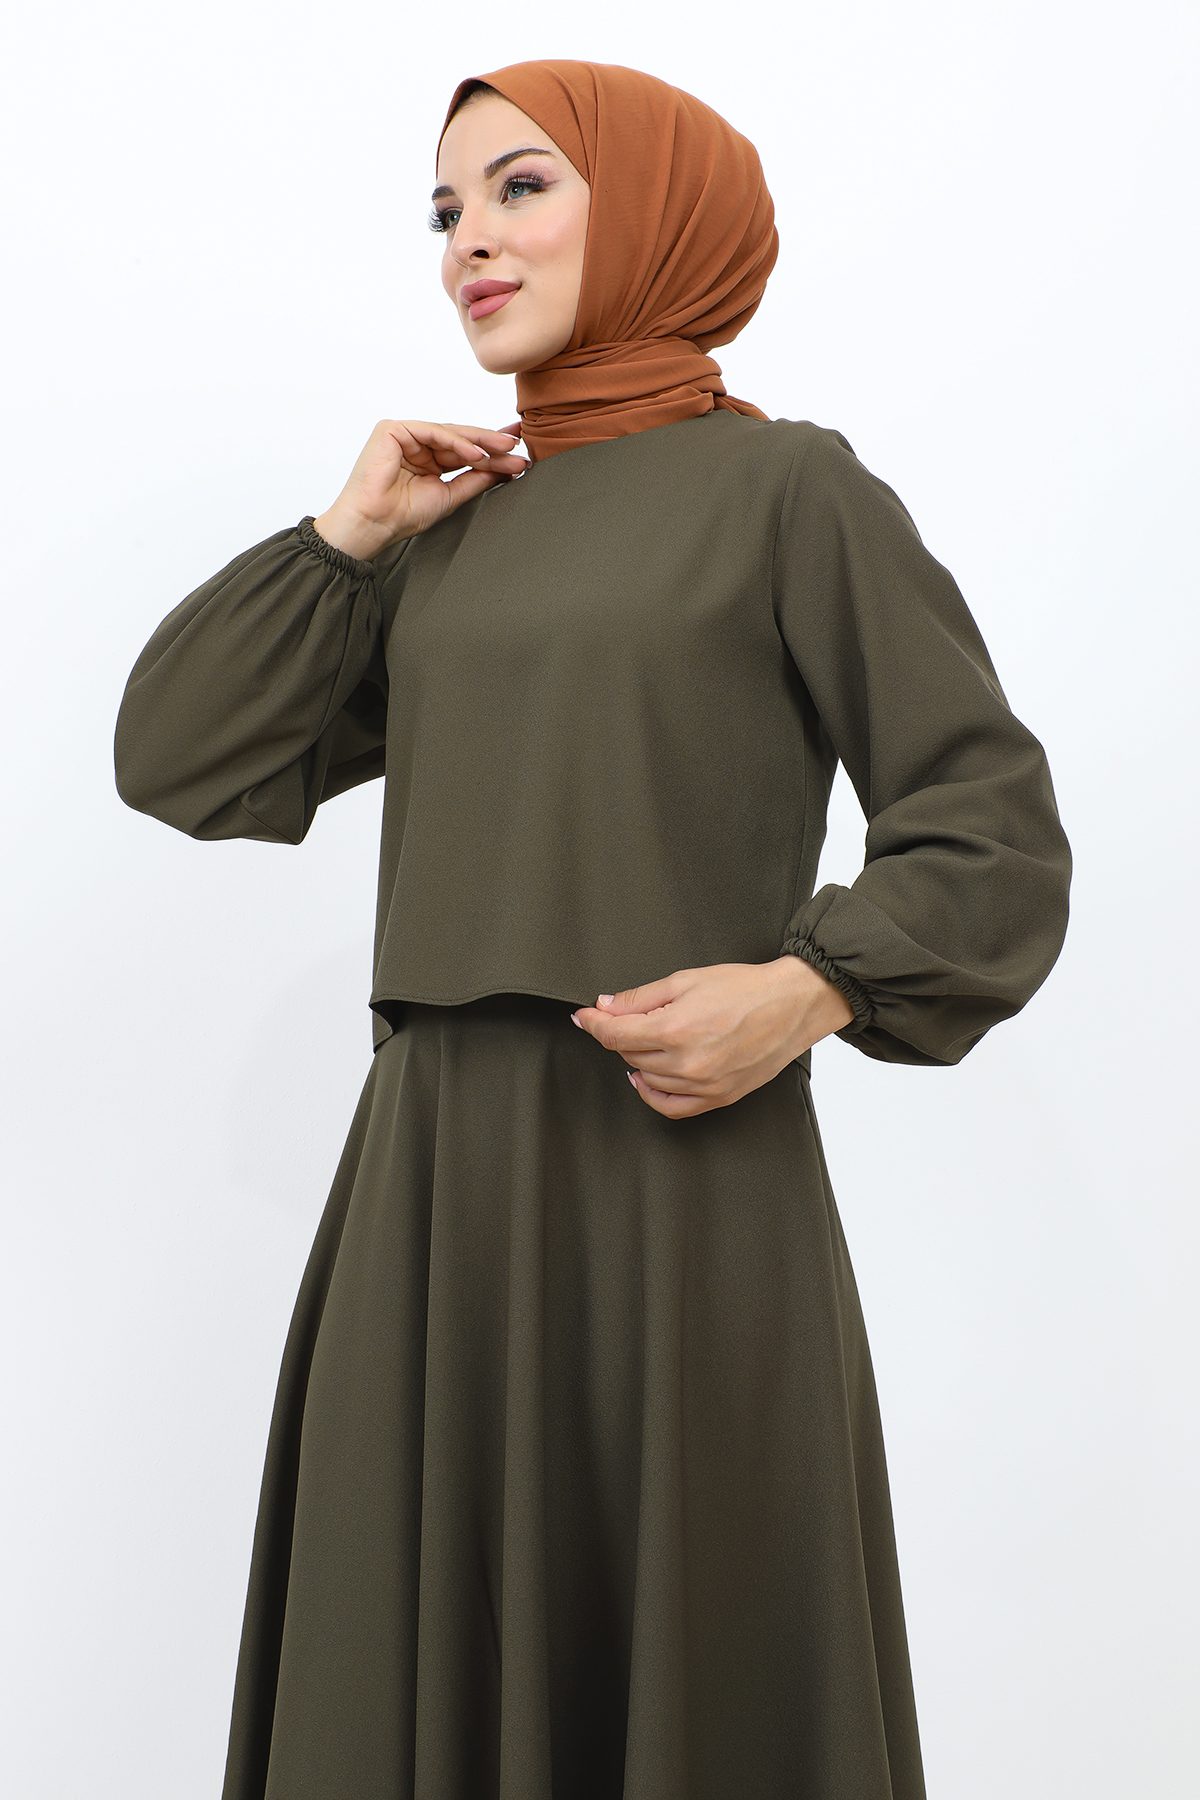 modanisa jilbab